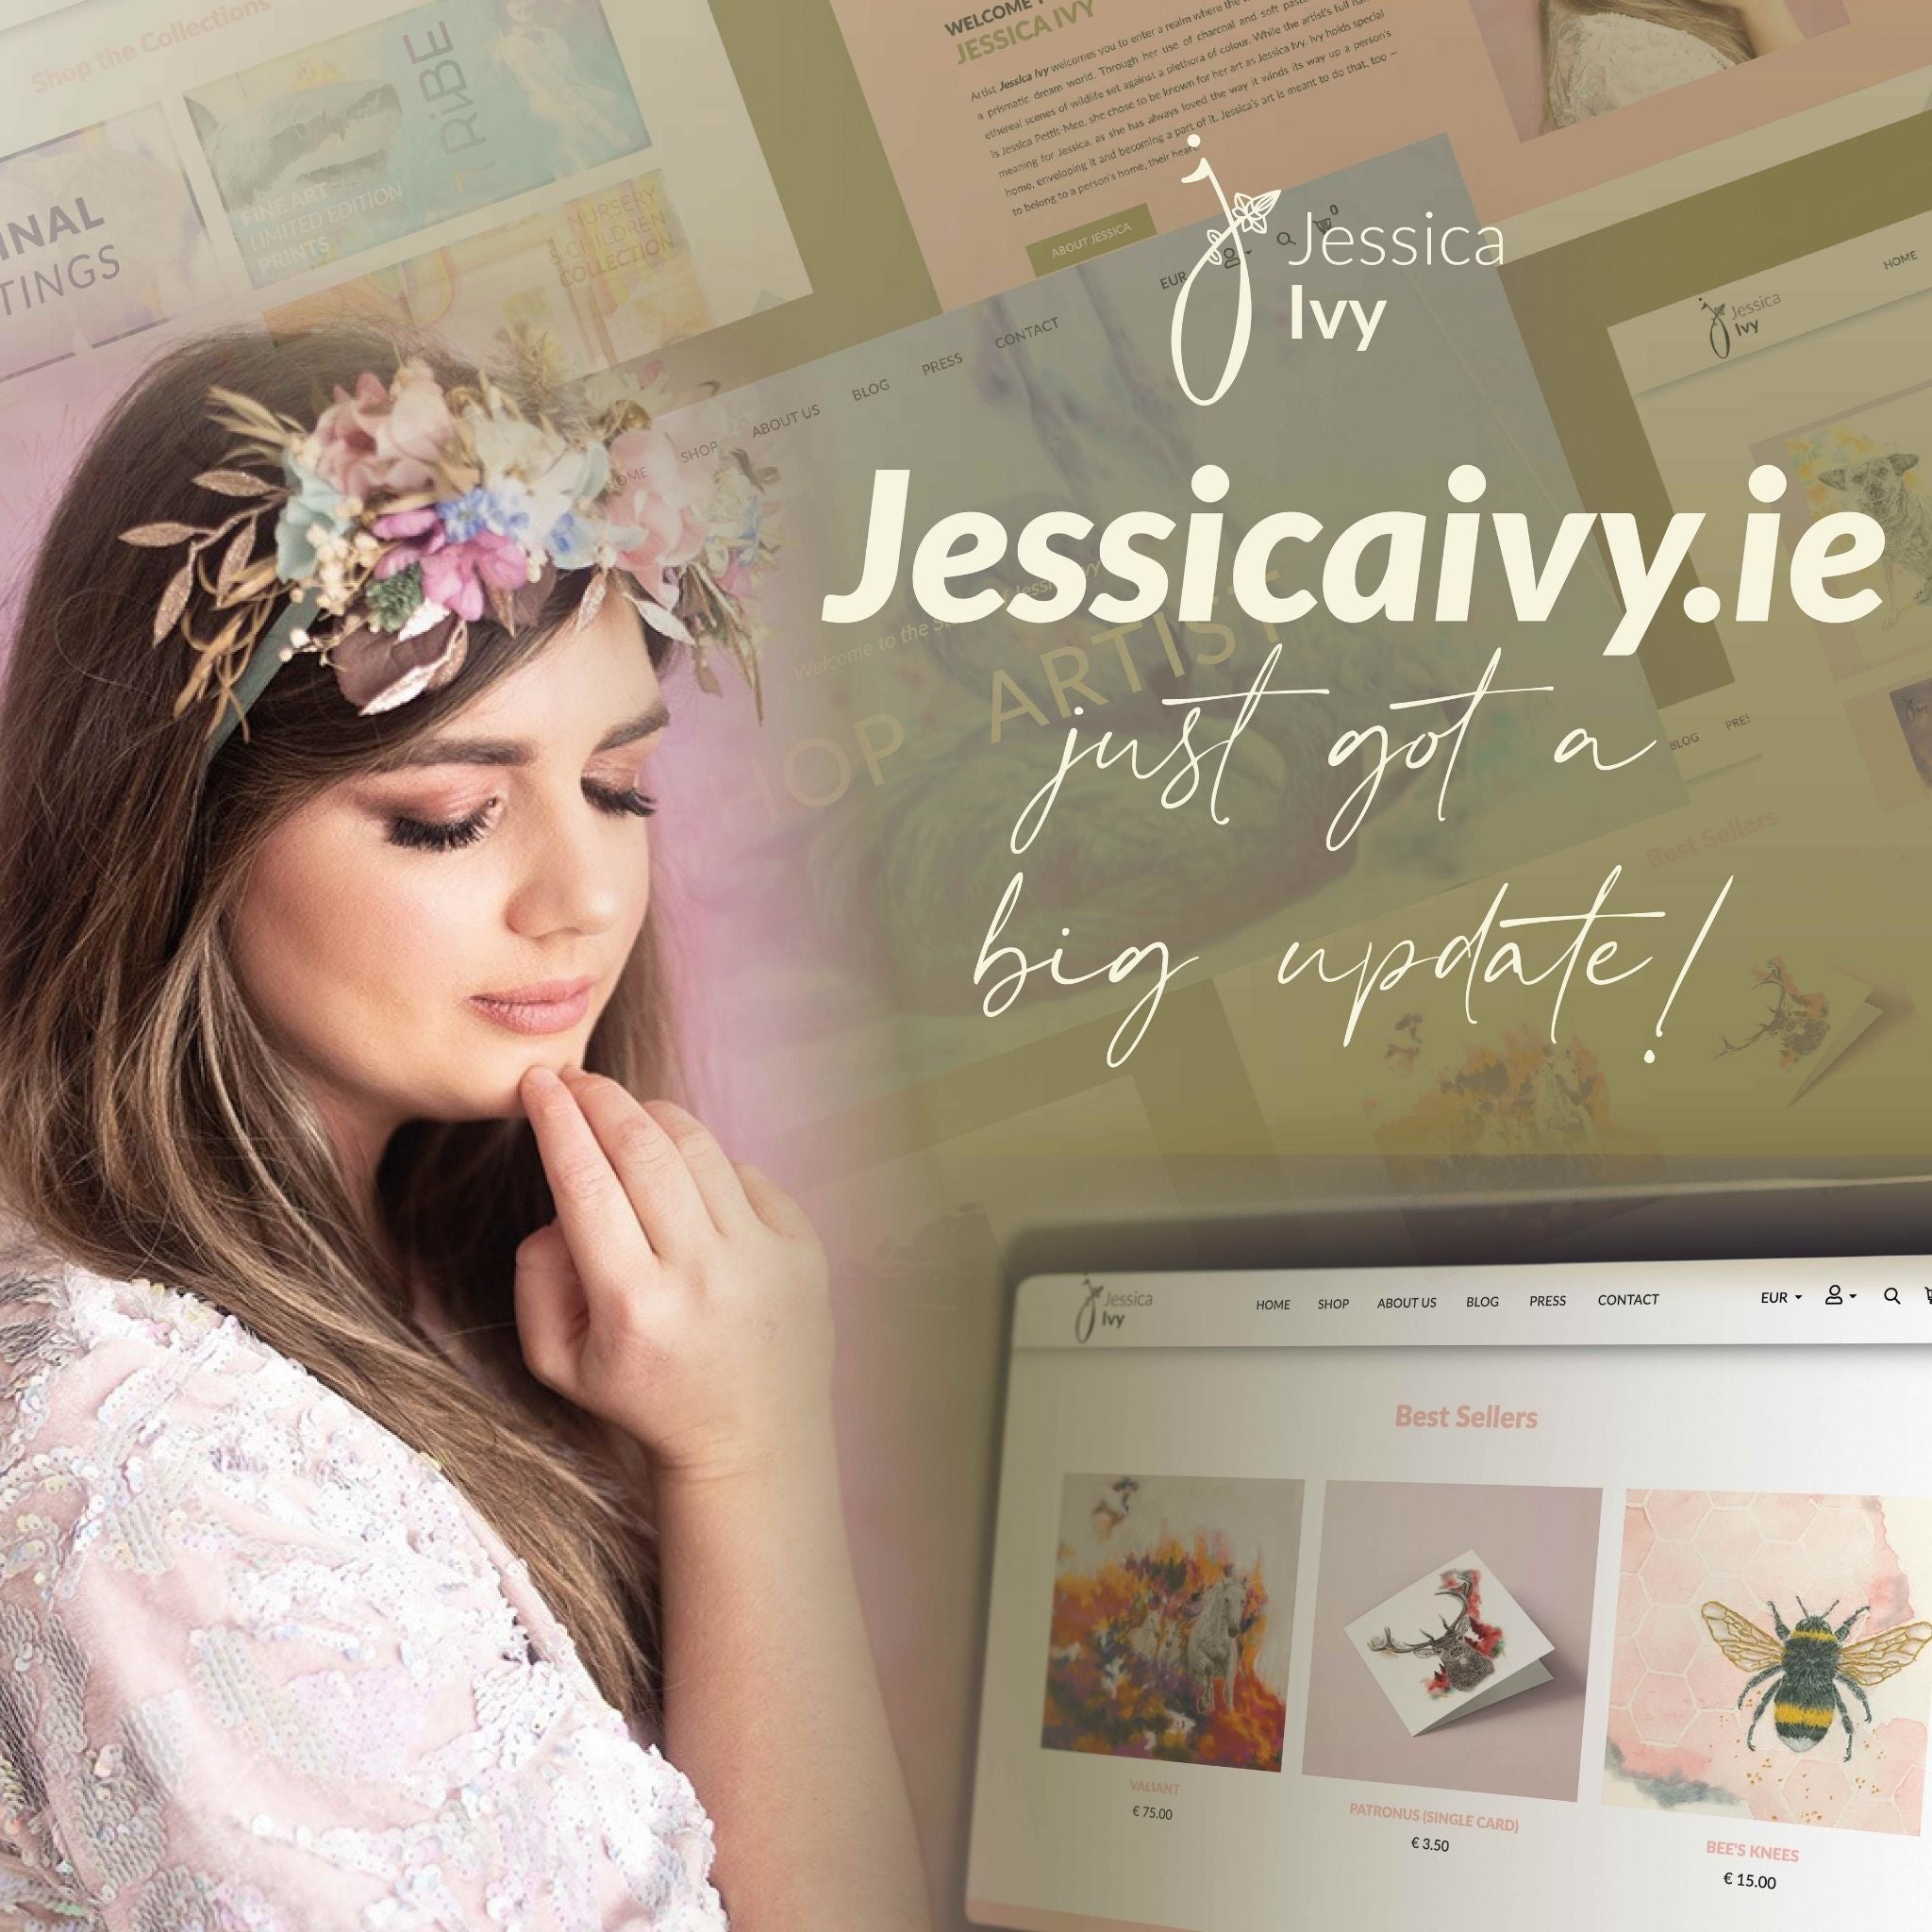 Jessicaivy.ie just got a big update! - Jessica Ivy